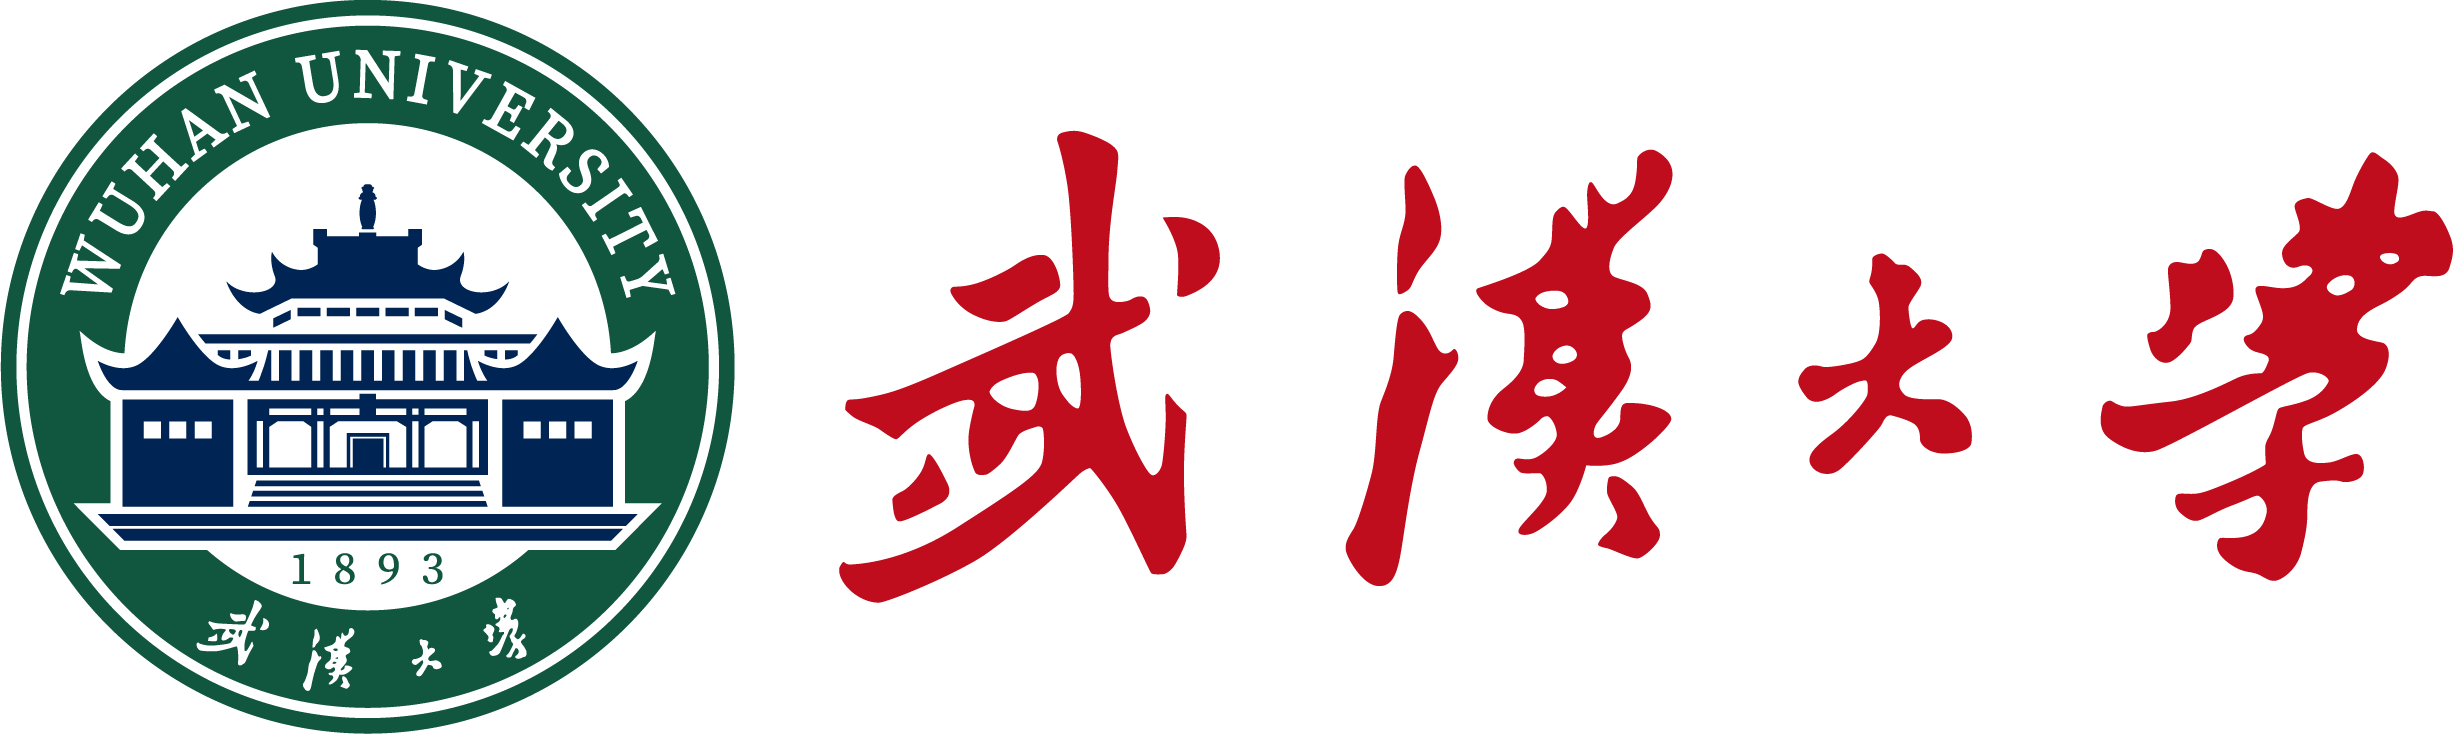 武汉大学 logo.png